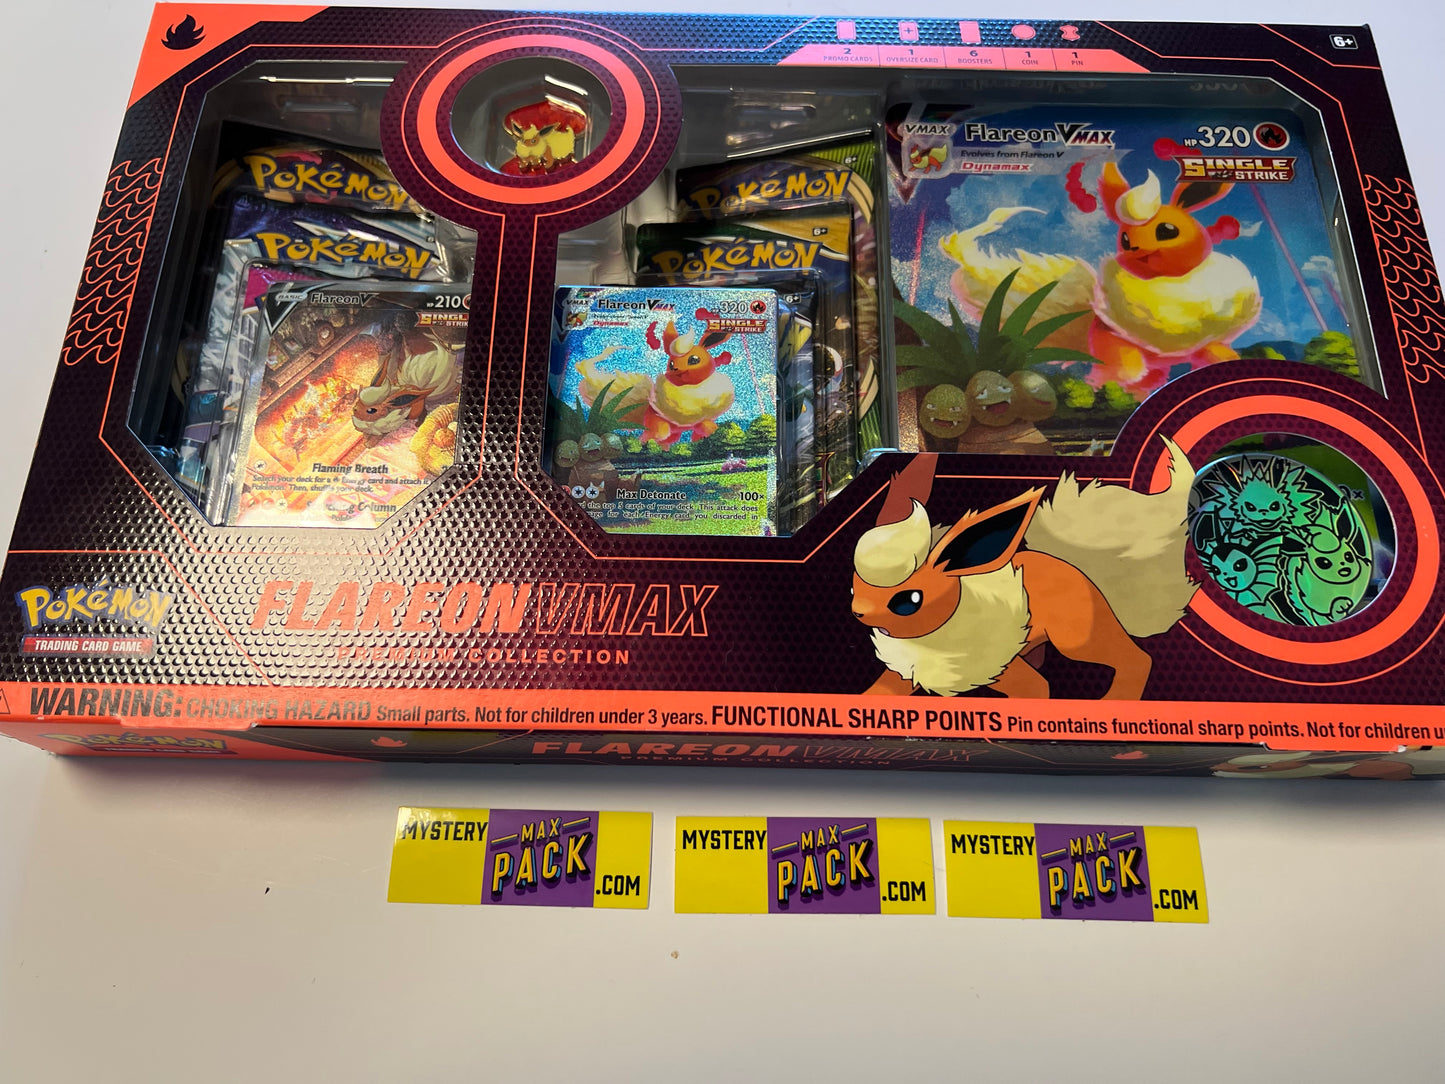 Pokémon Flareon VMAX Premium Collection